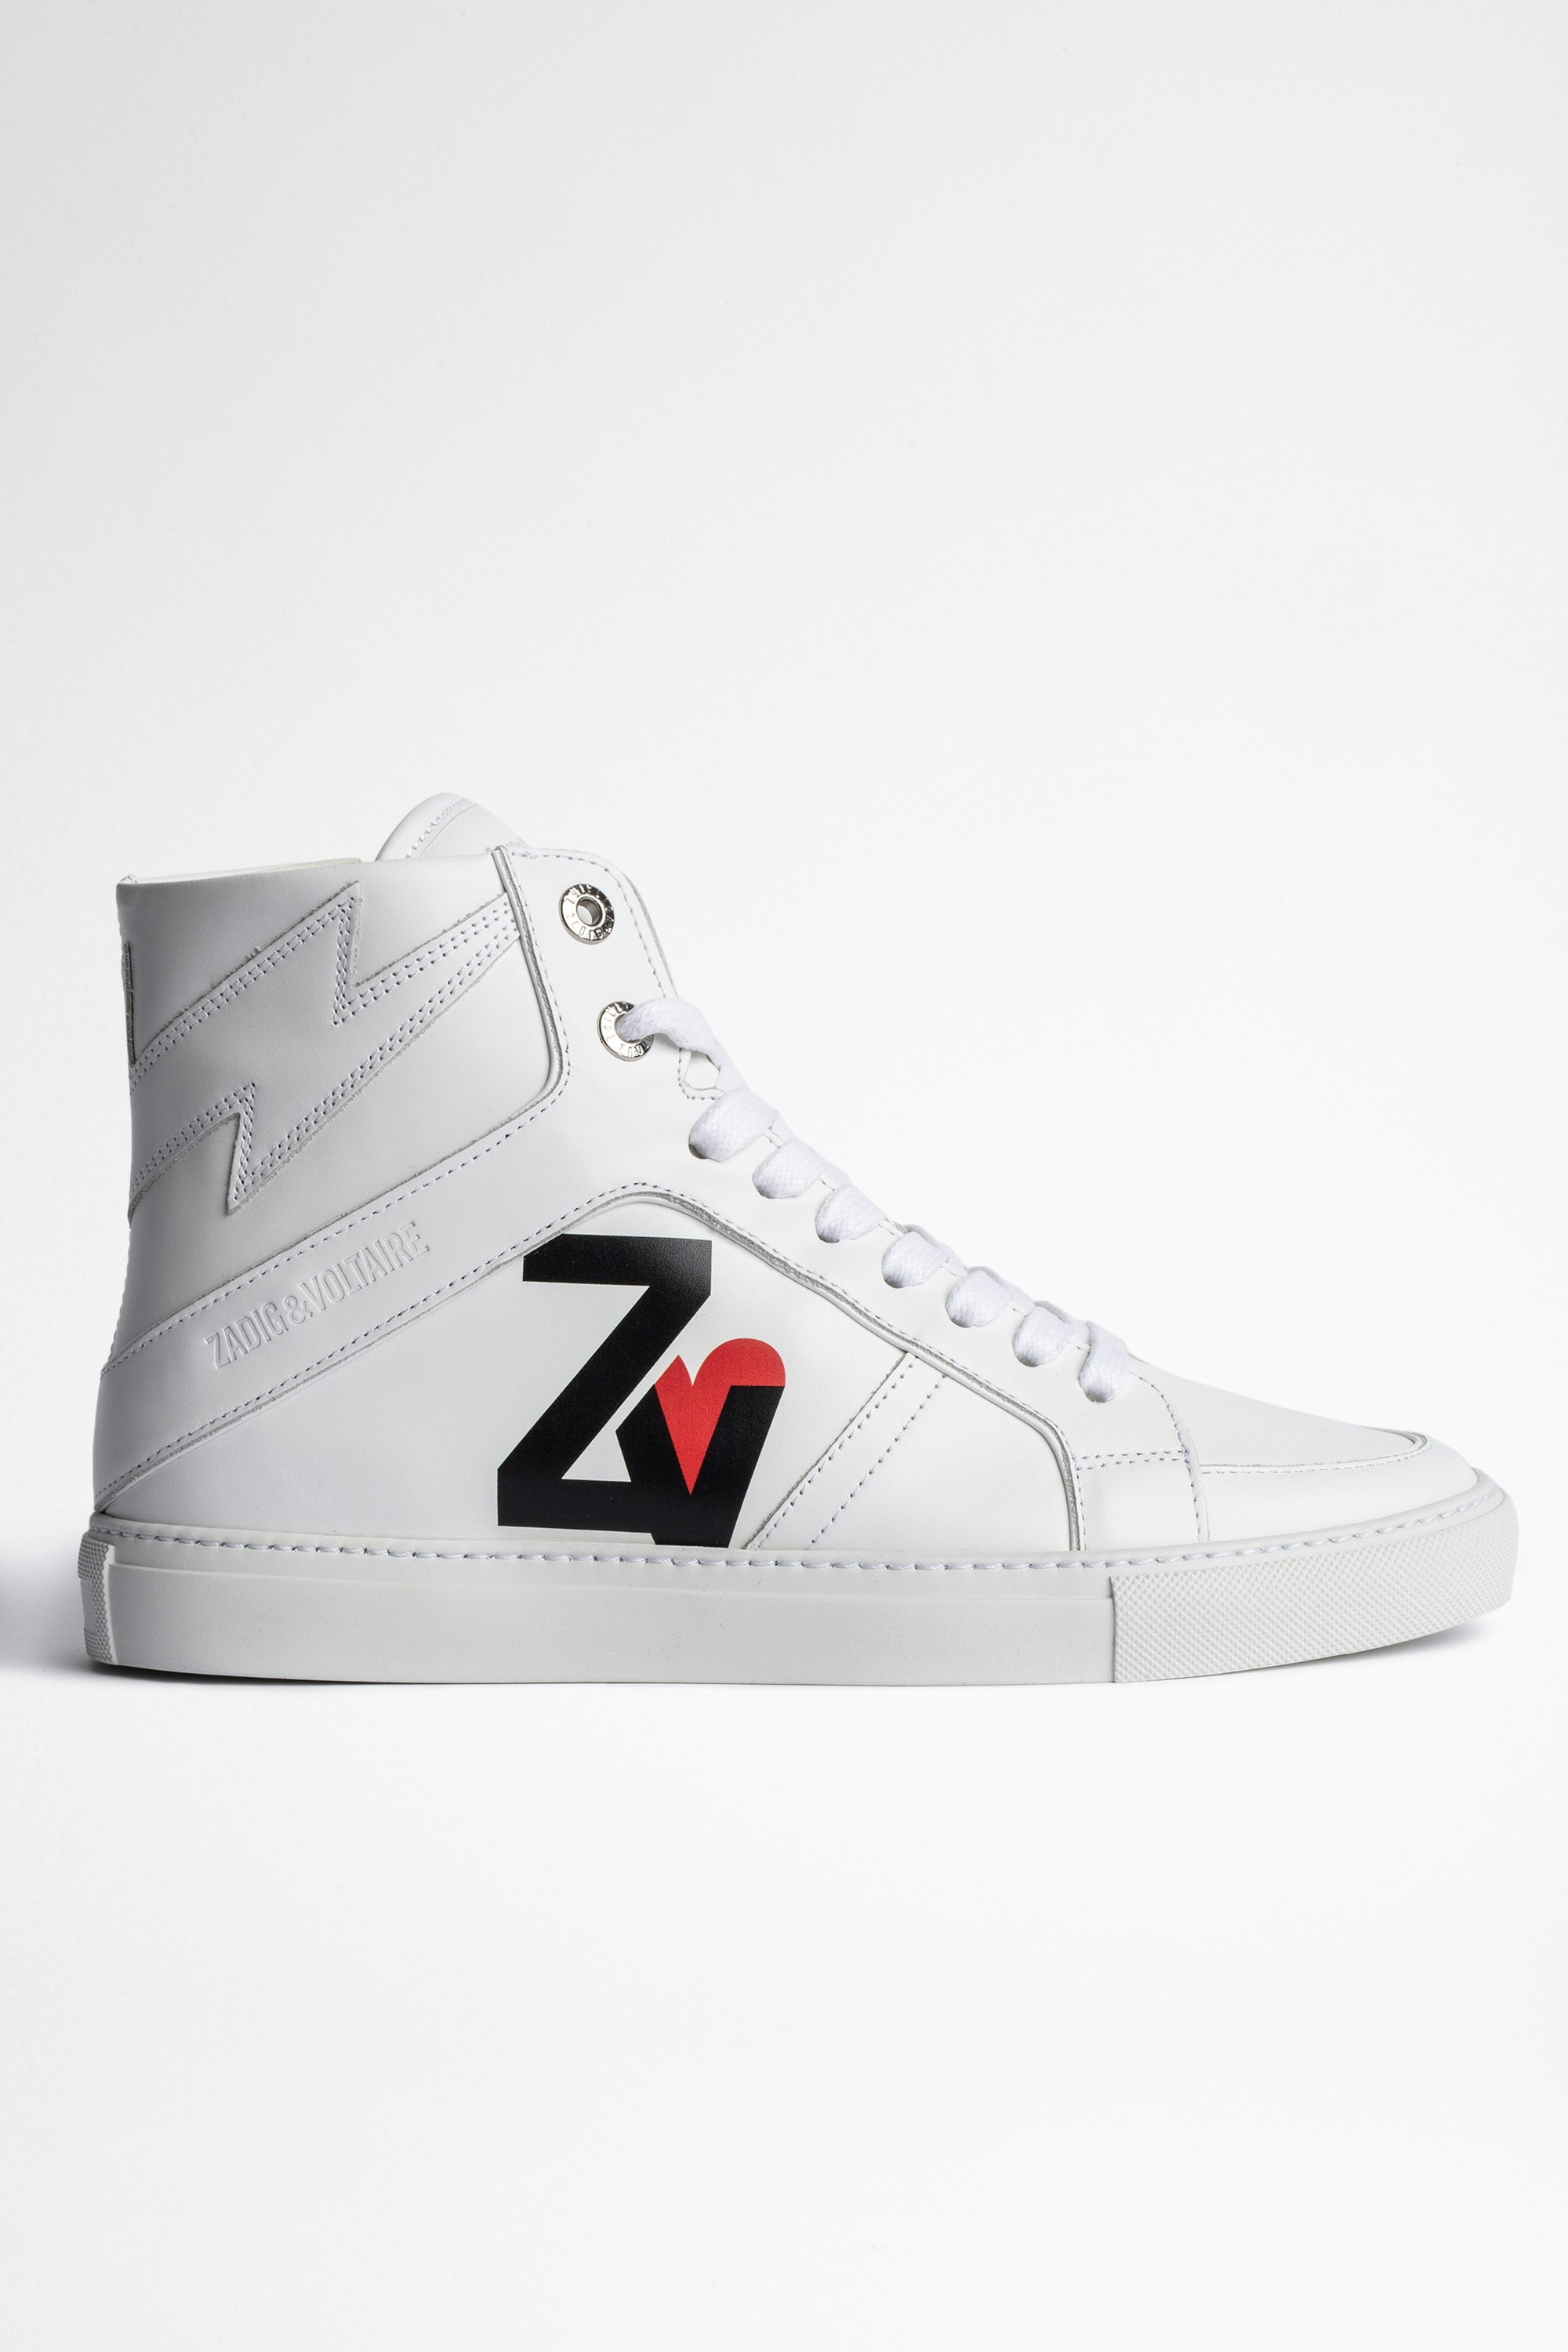 Sneaker ZV1747 High Flash Pelle Sneaker alte in pelle bianca con cuore ZV donna